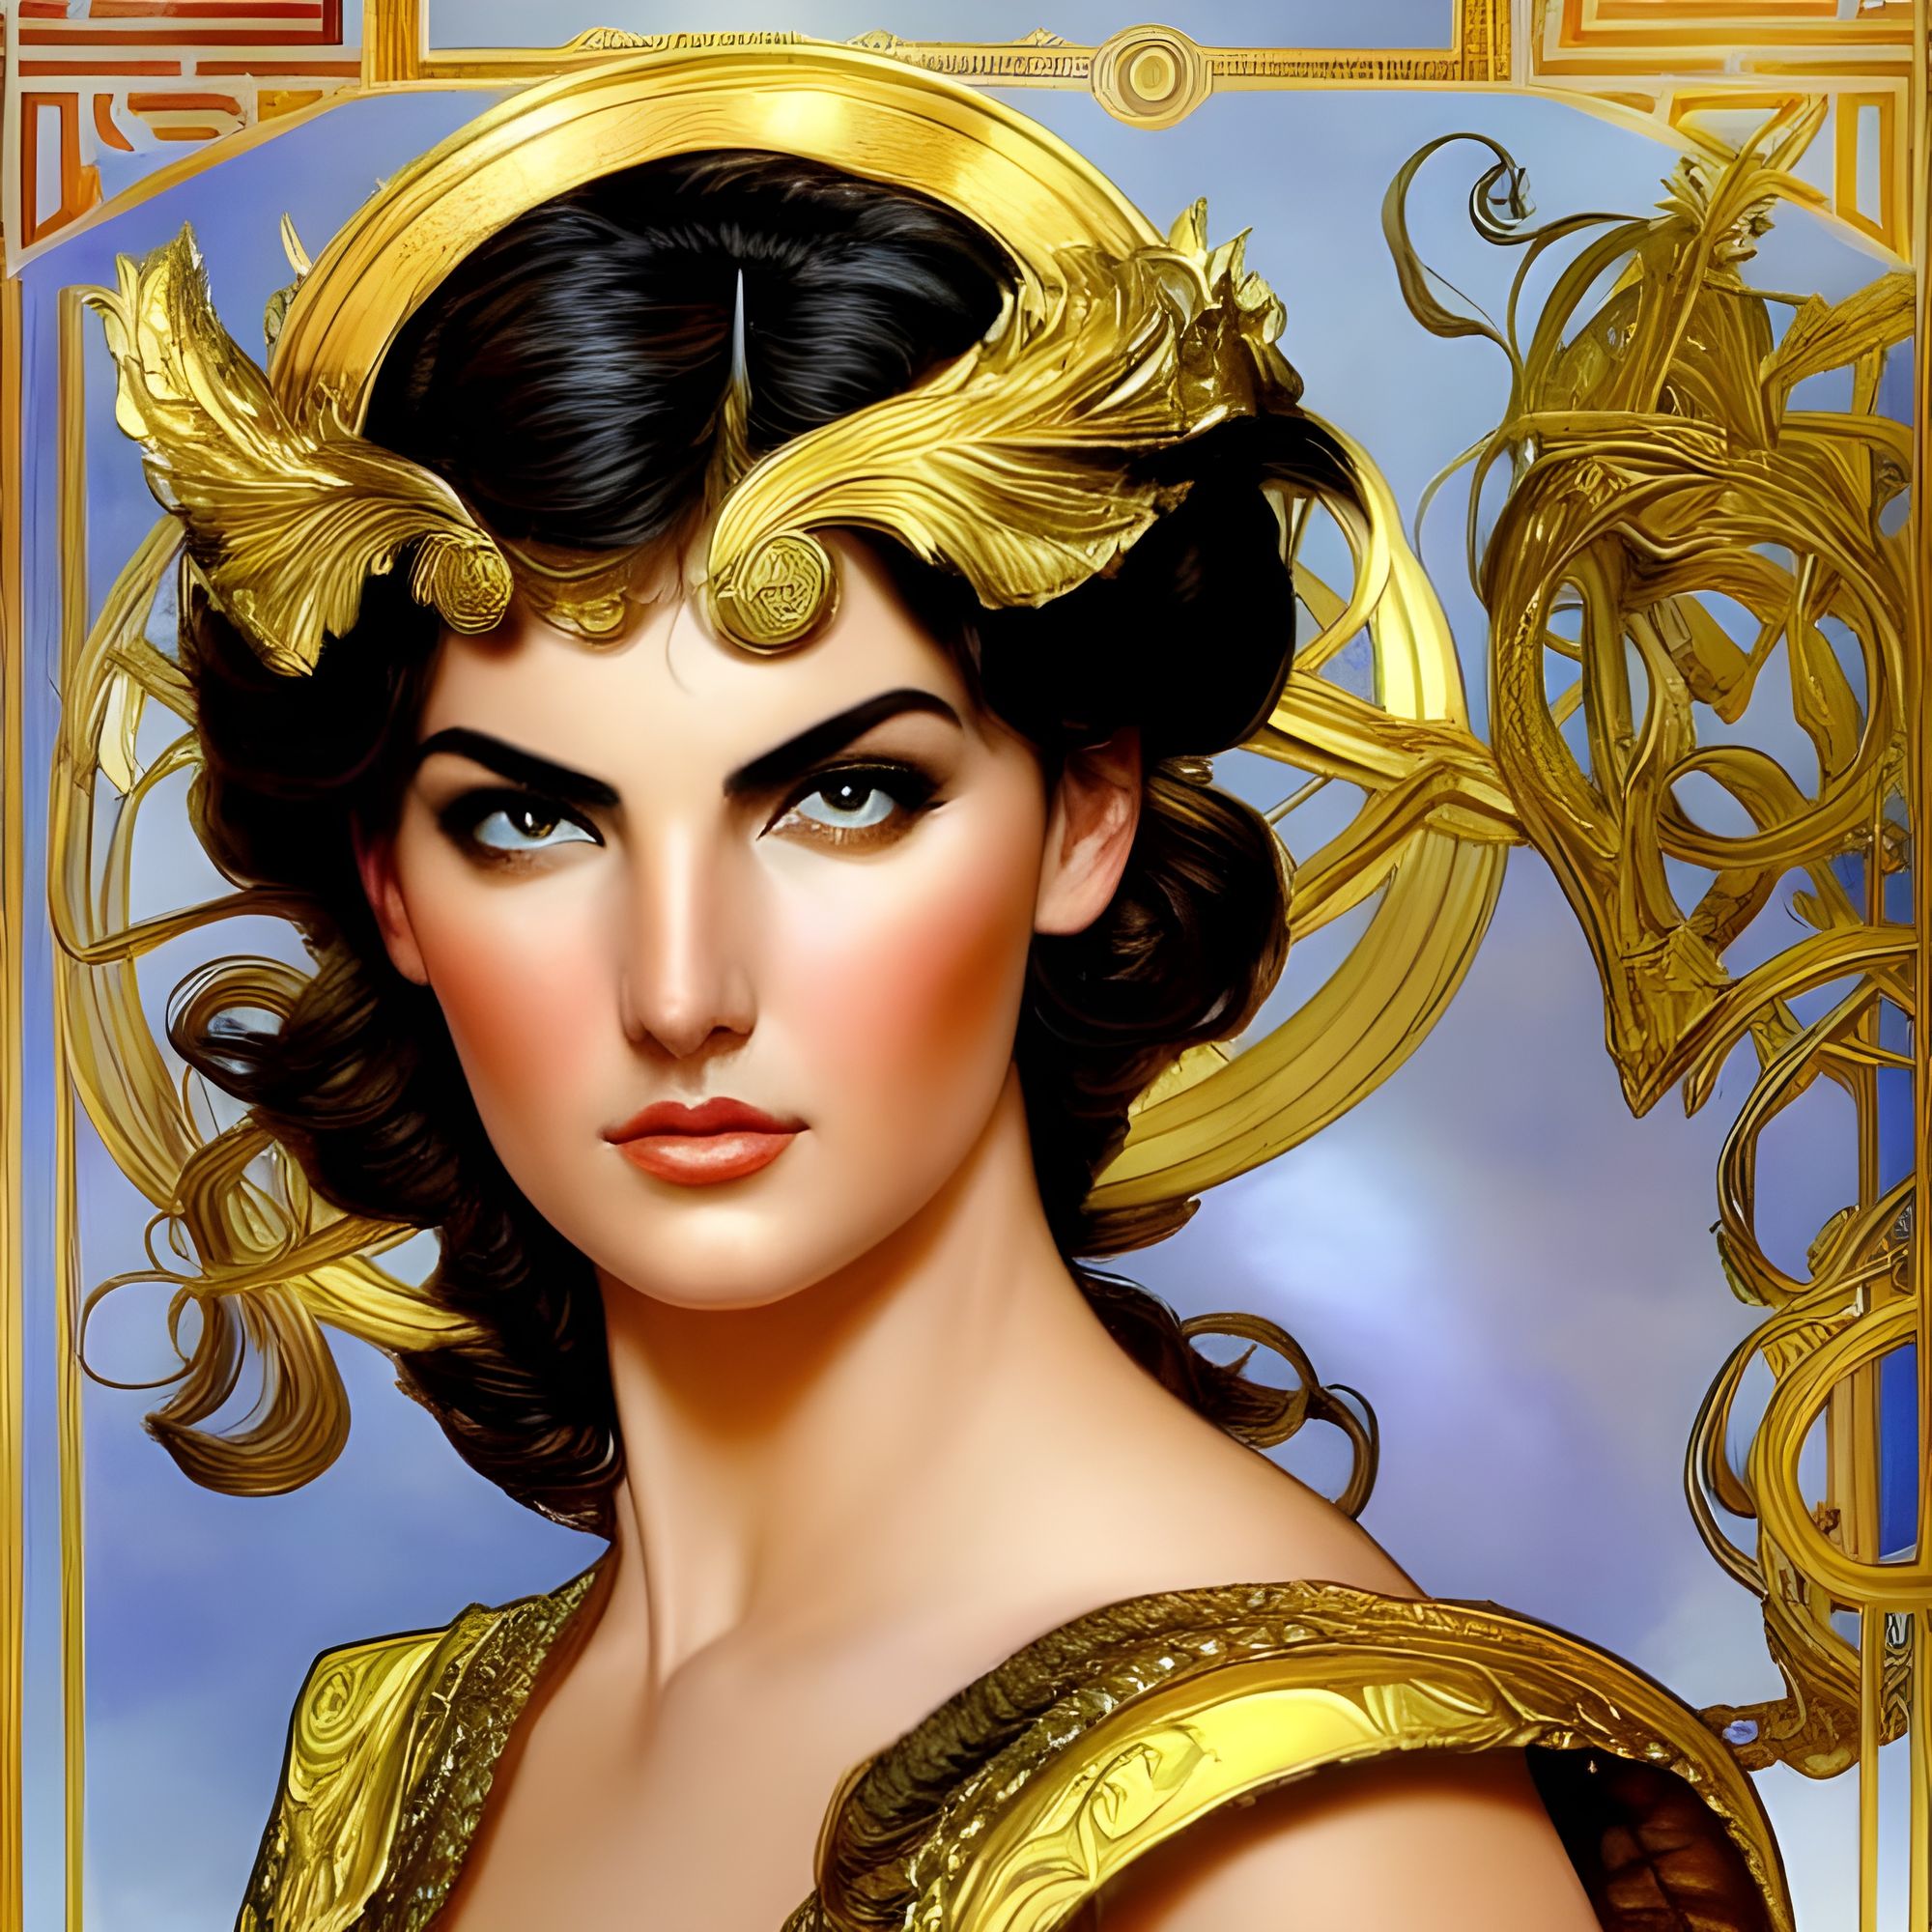 Greek goddess, camilla belle lookalike. : r/nightcafe